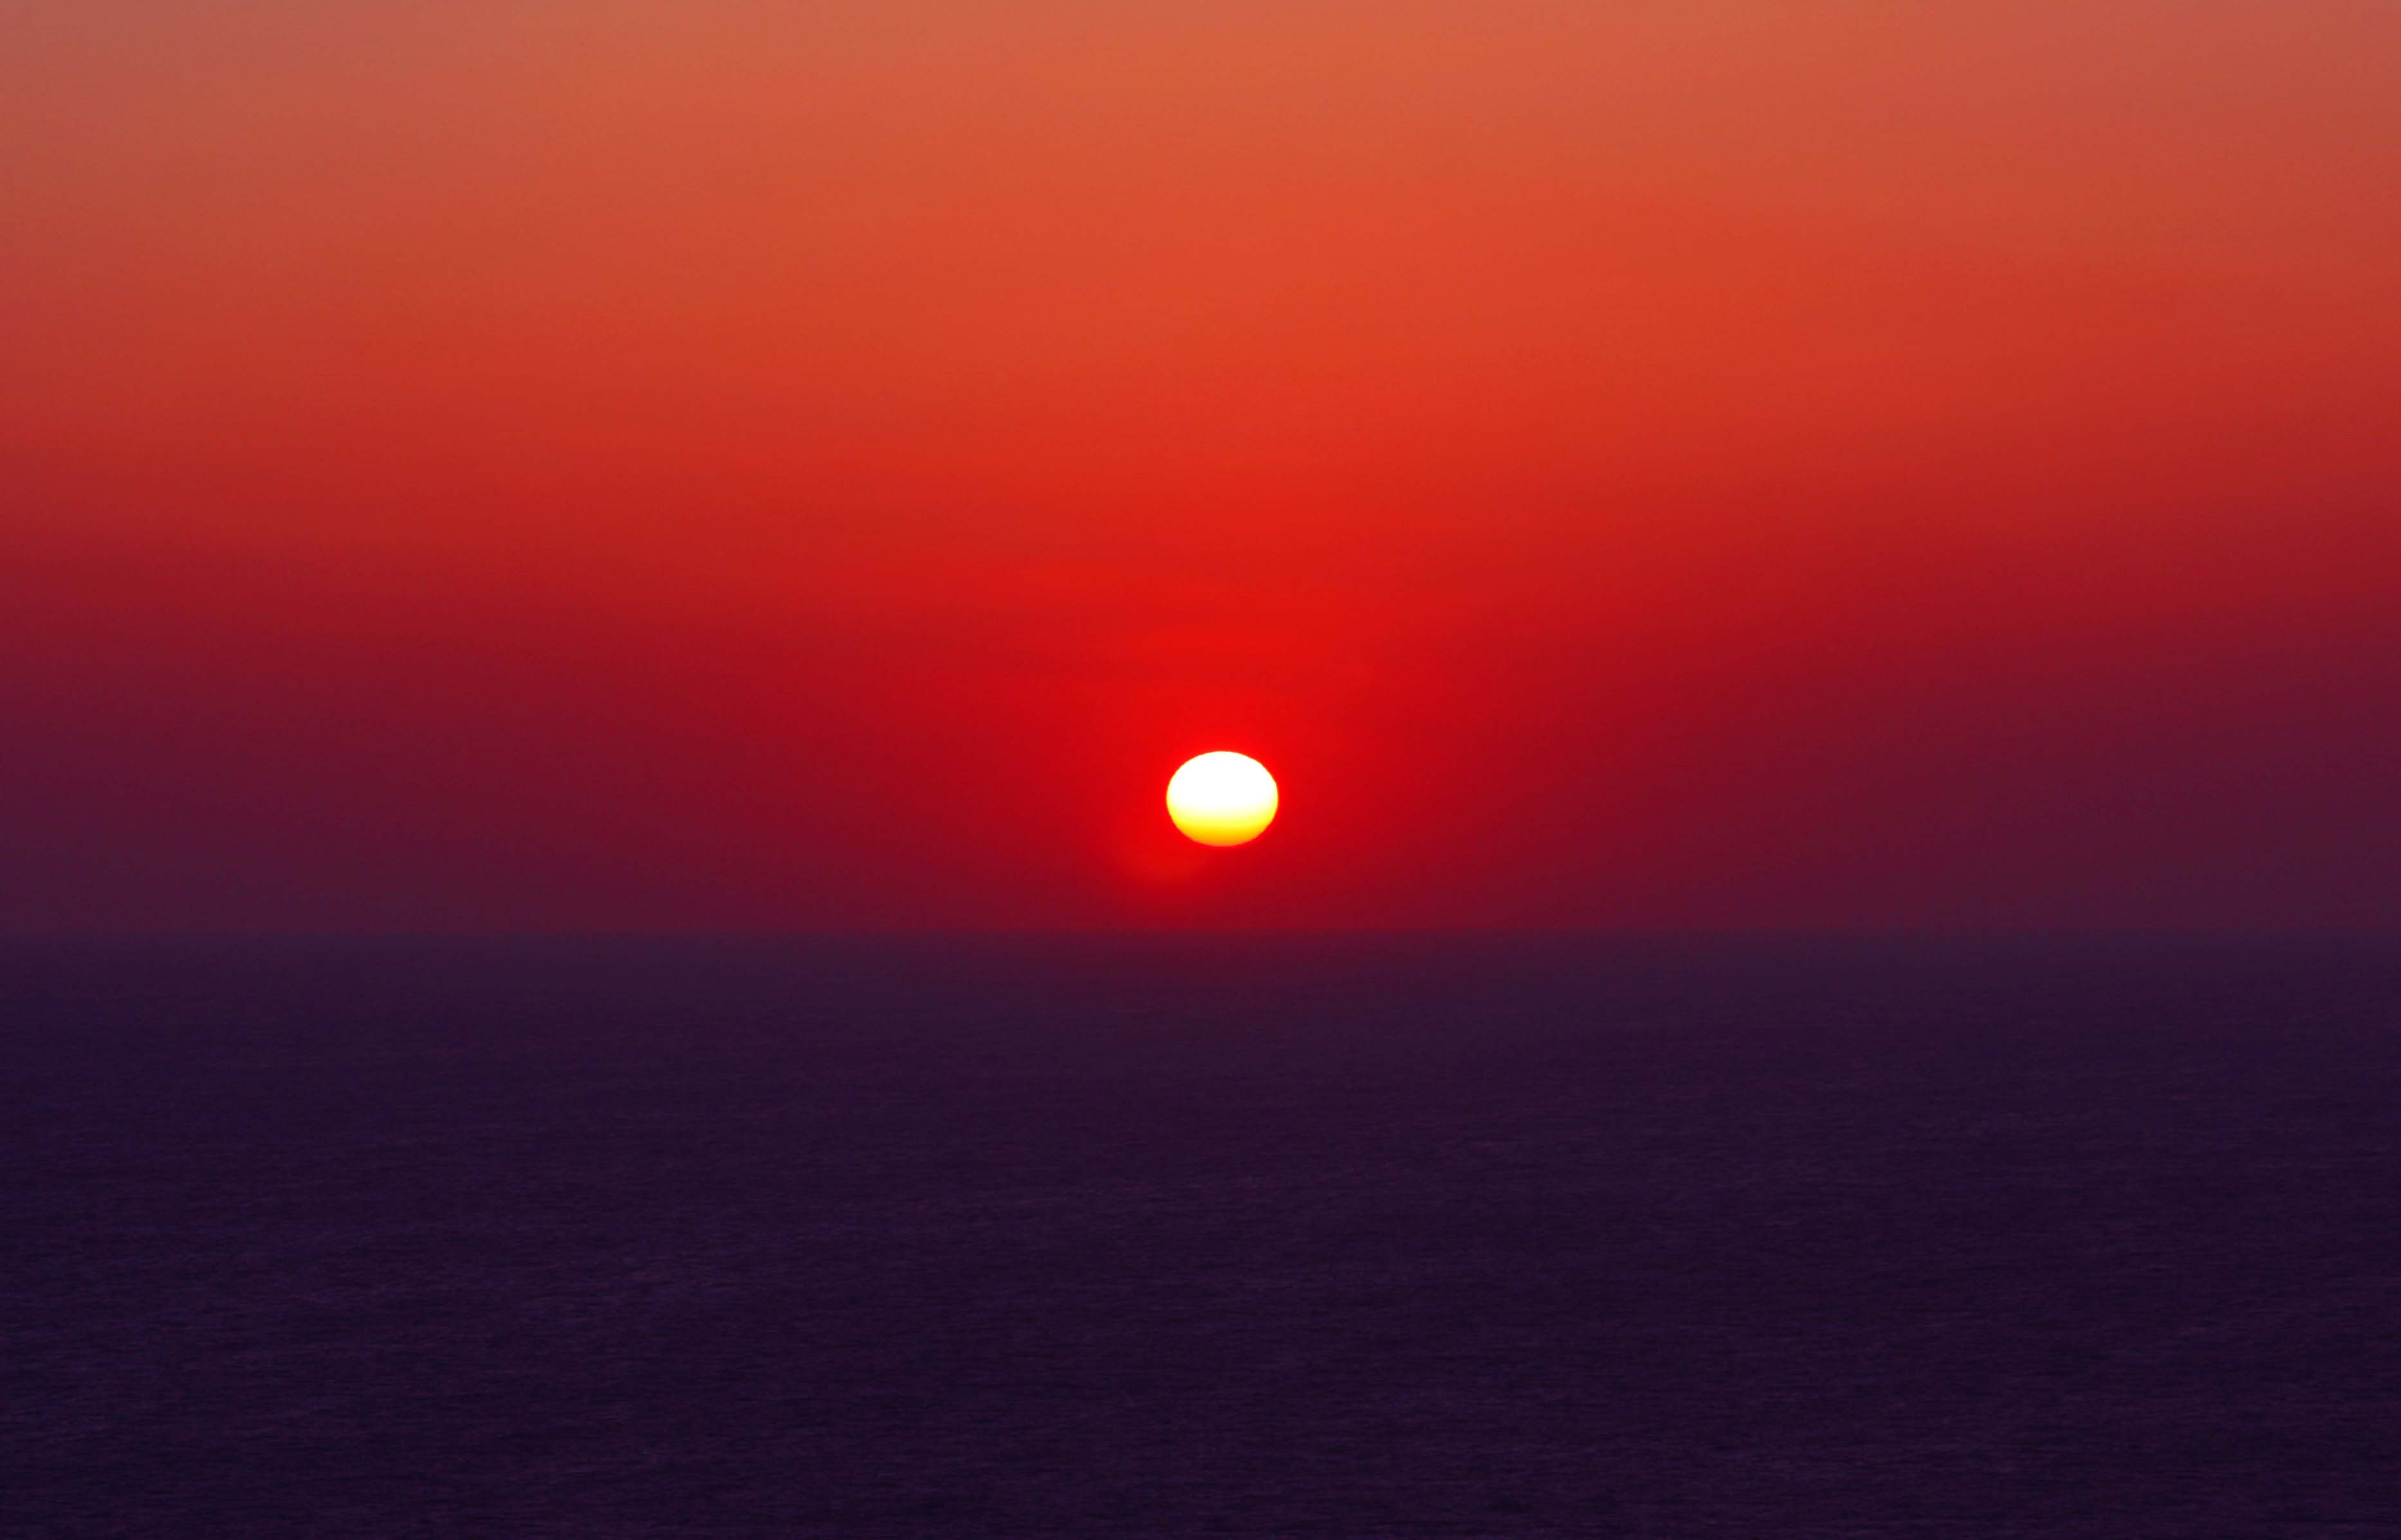 Flickr - law keven - A Drop in the Ocean...